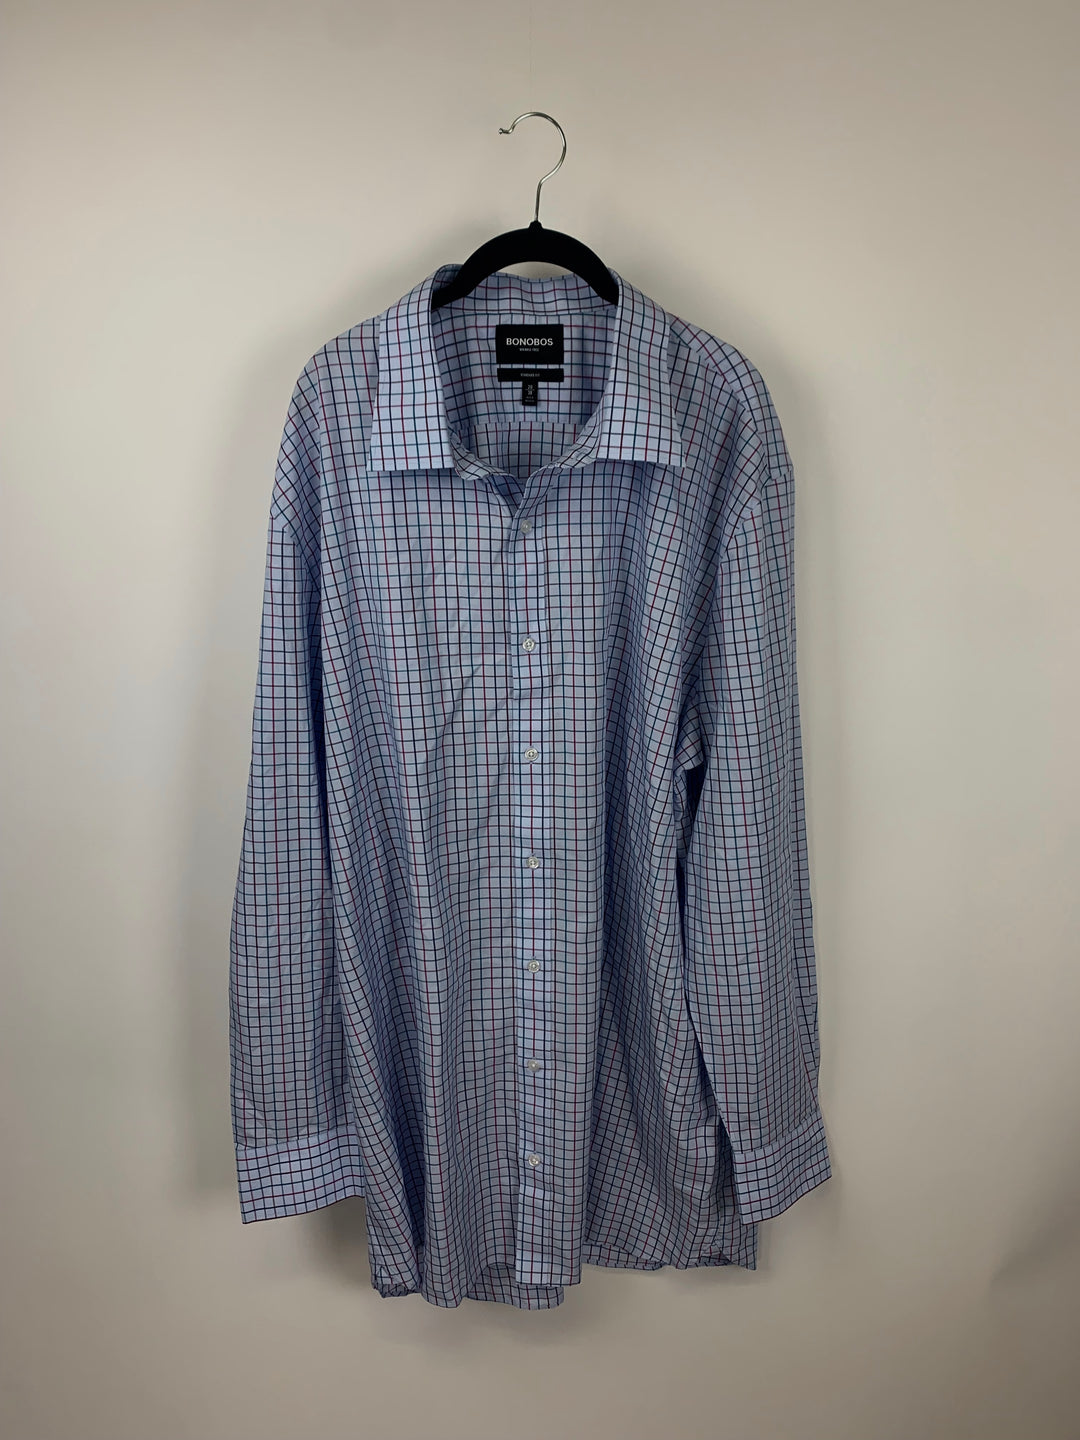 MENS Long Sleeve Shirt - Size 20/38